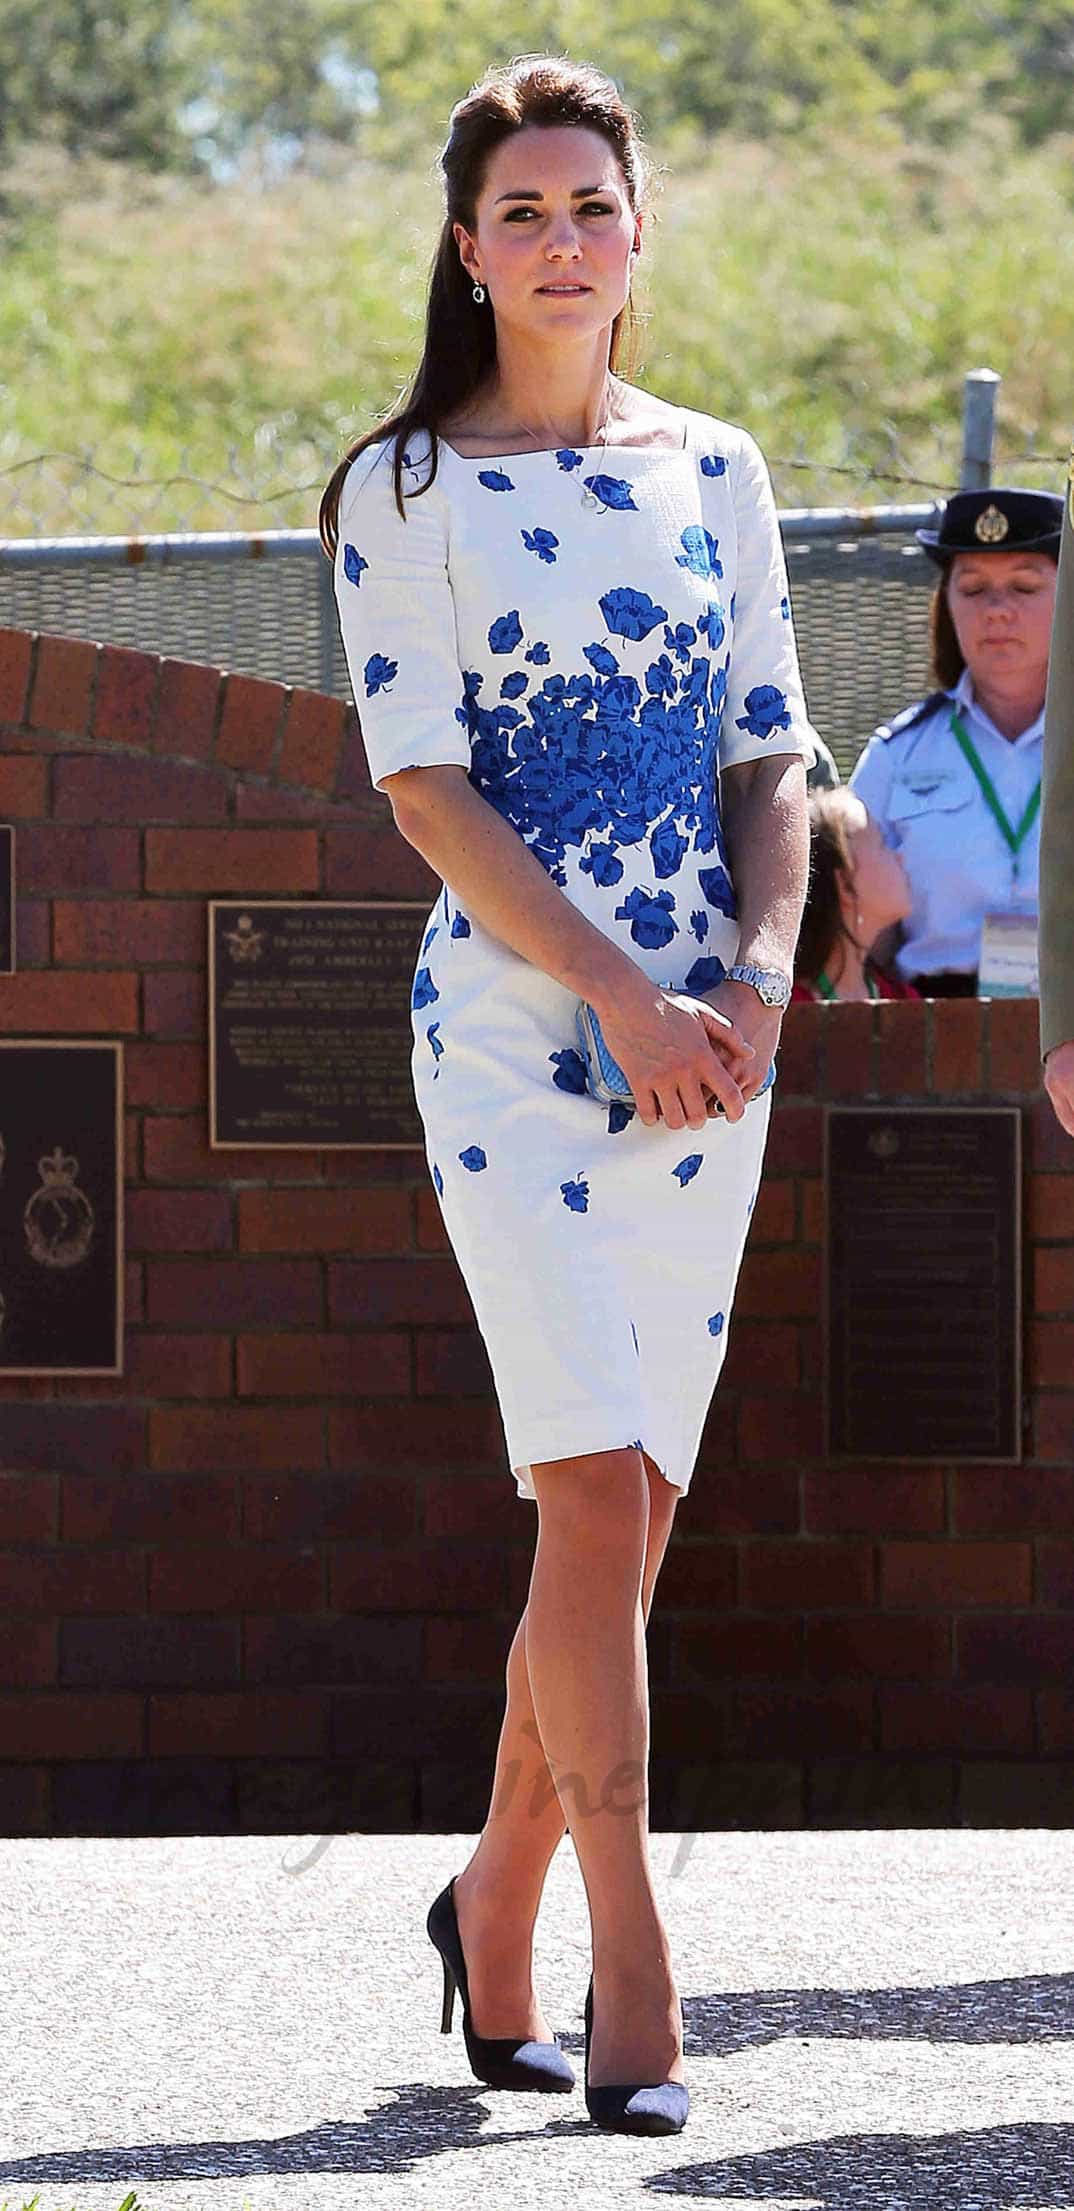 Duquesa de Cambridge, visita a Brisbane, Australia - Abril 2014